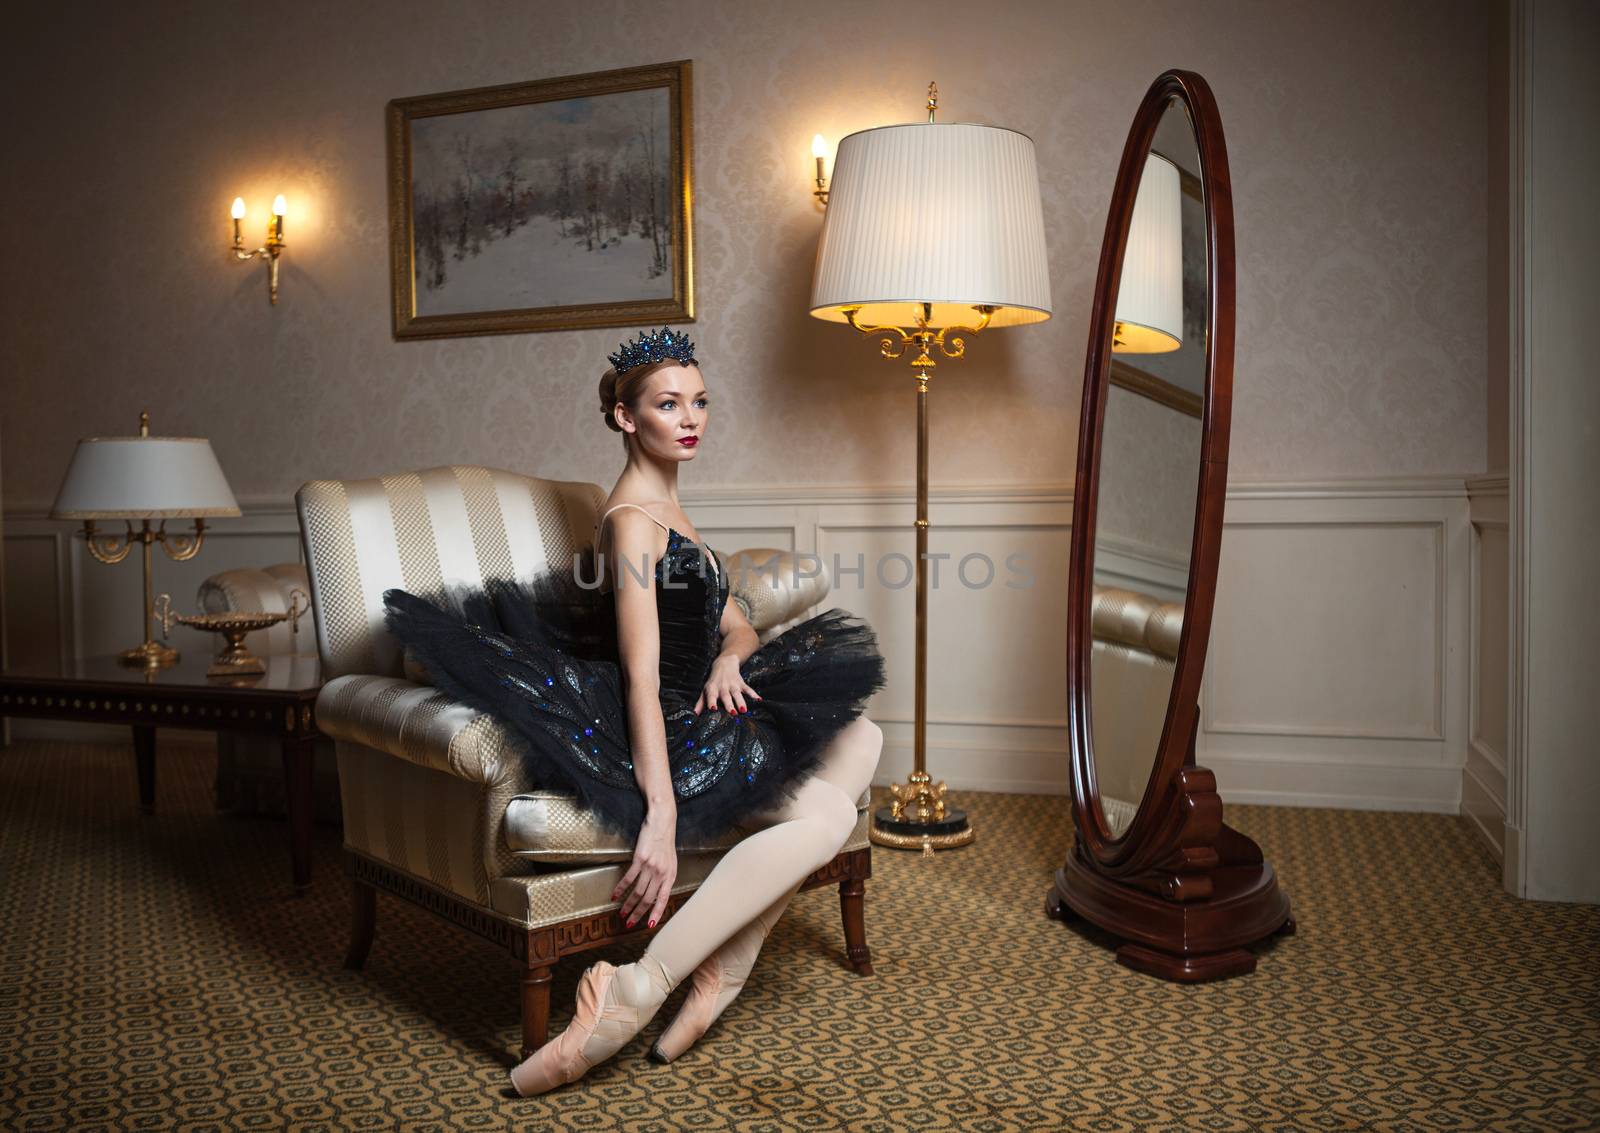 Ballerina in black tutu sitting in armchair by photobac